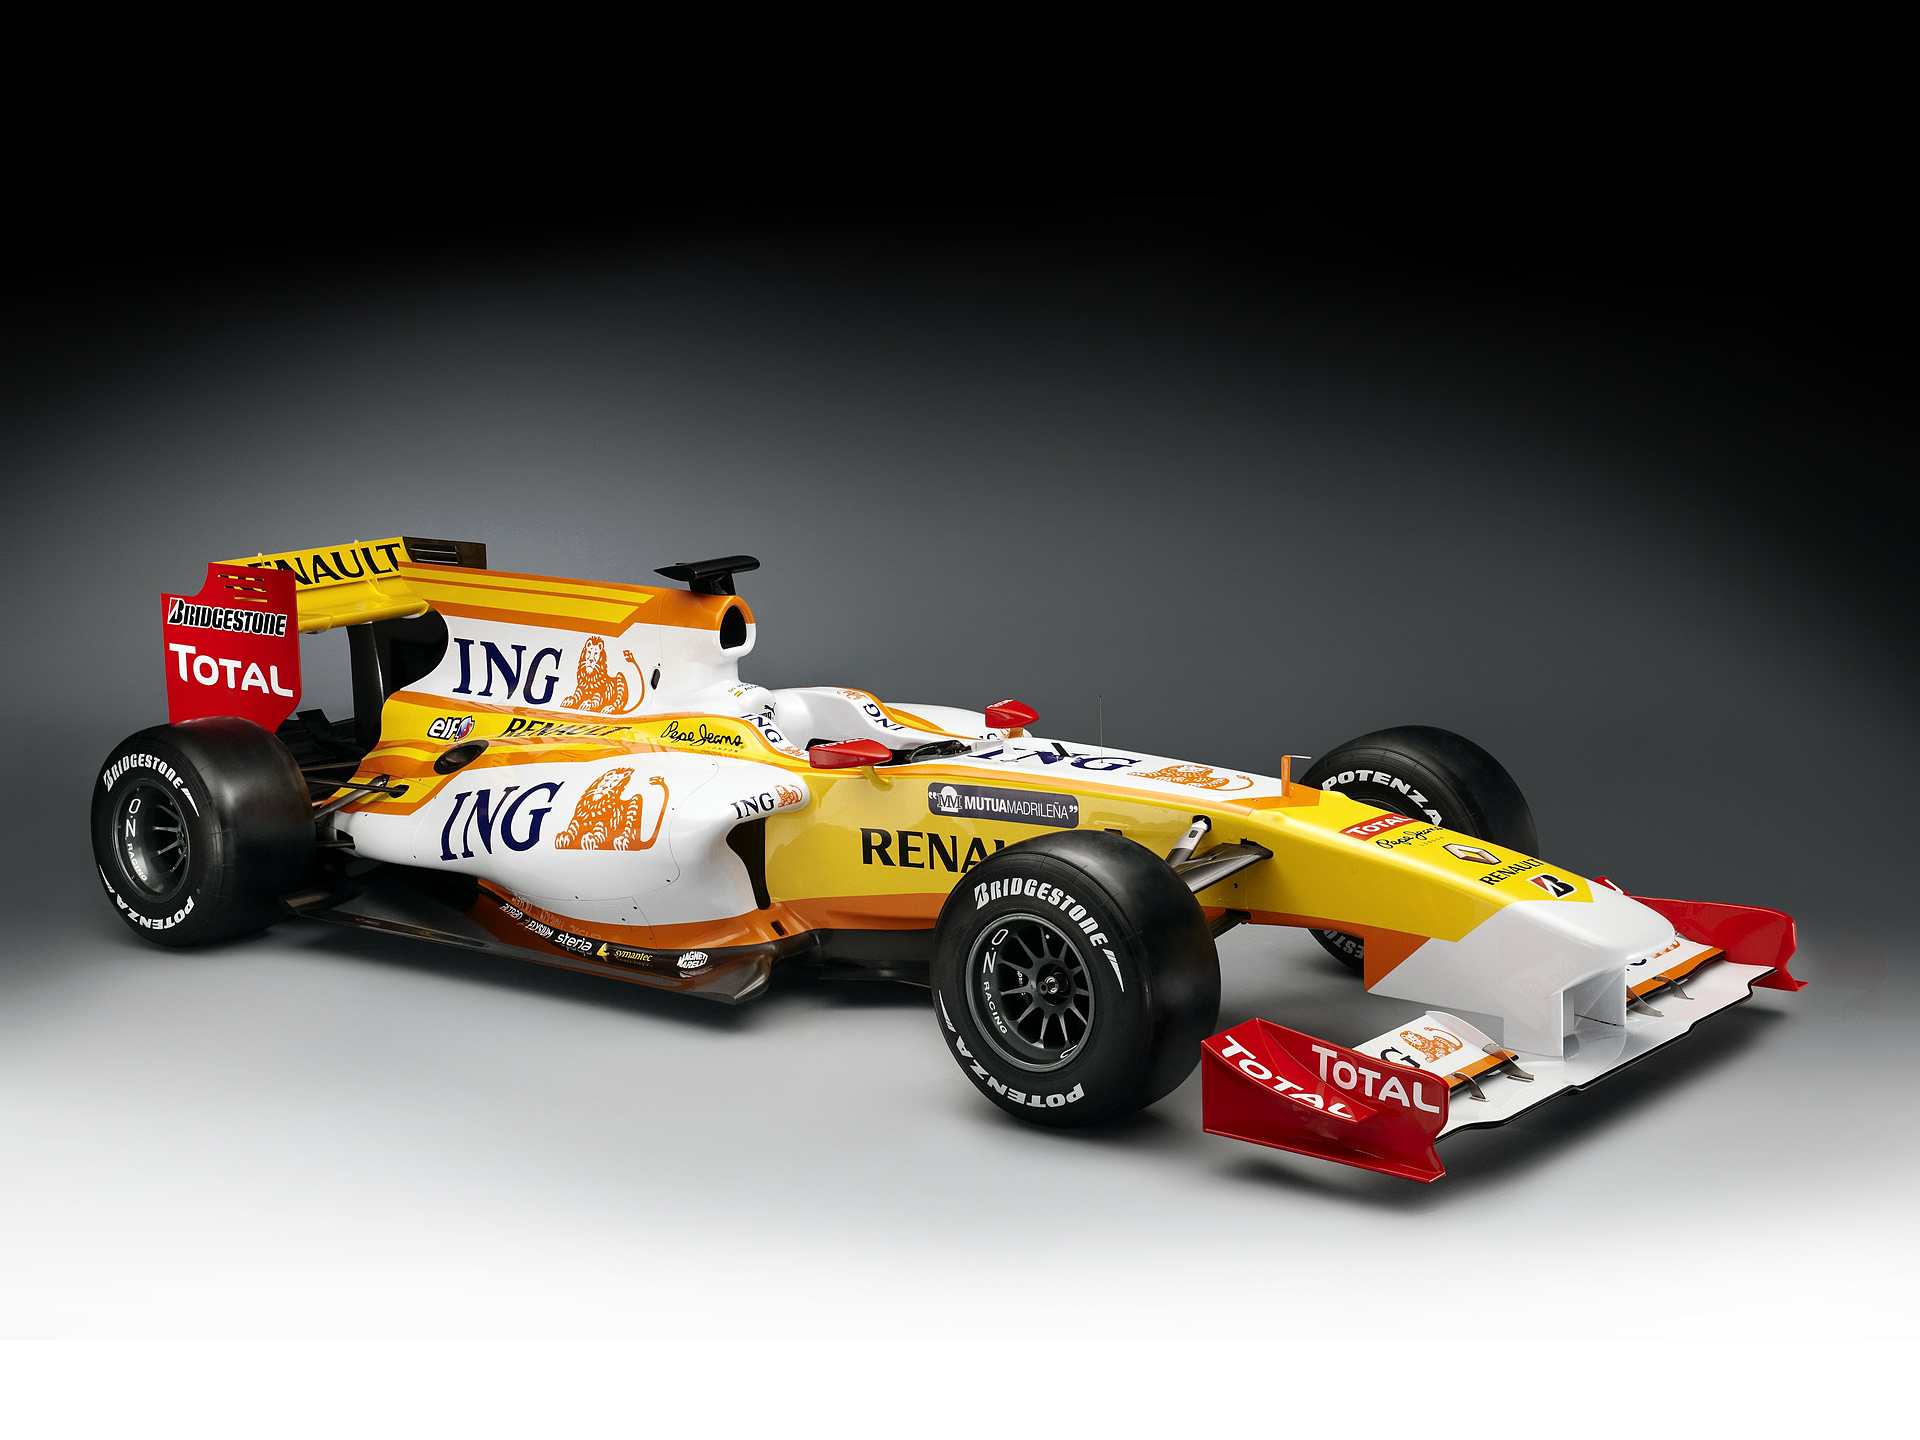  2009 Renault F1 R29 Wallpaper.